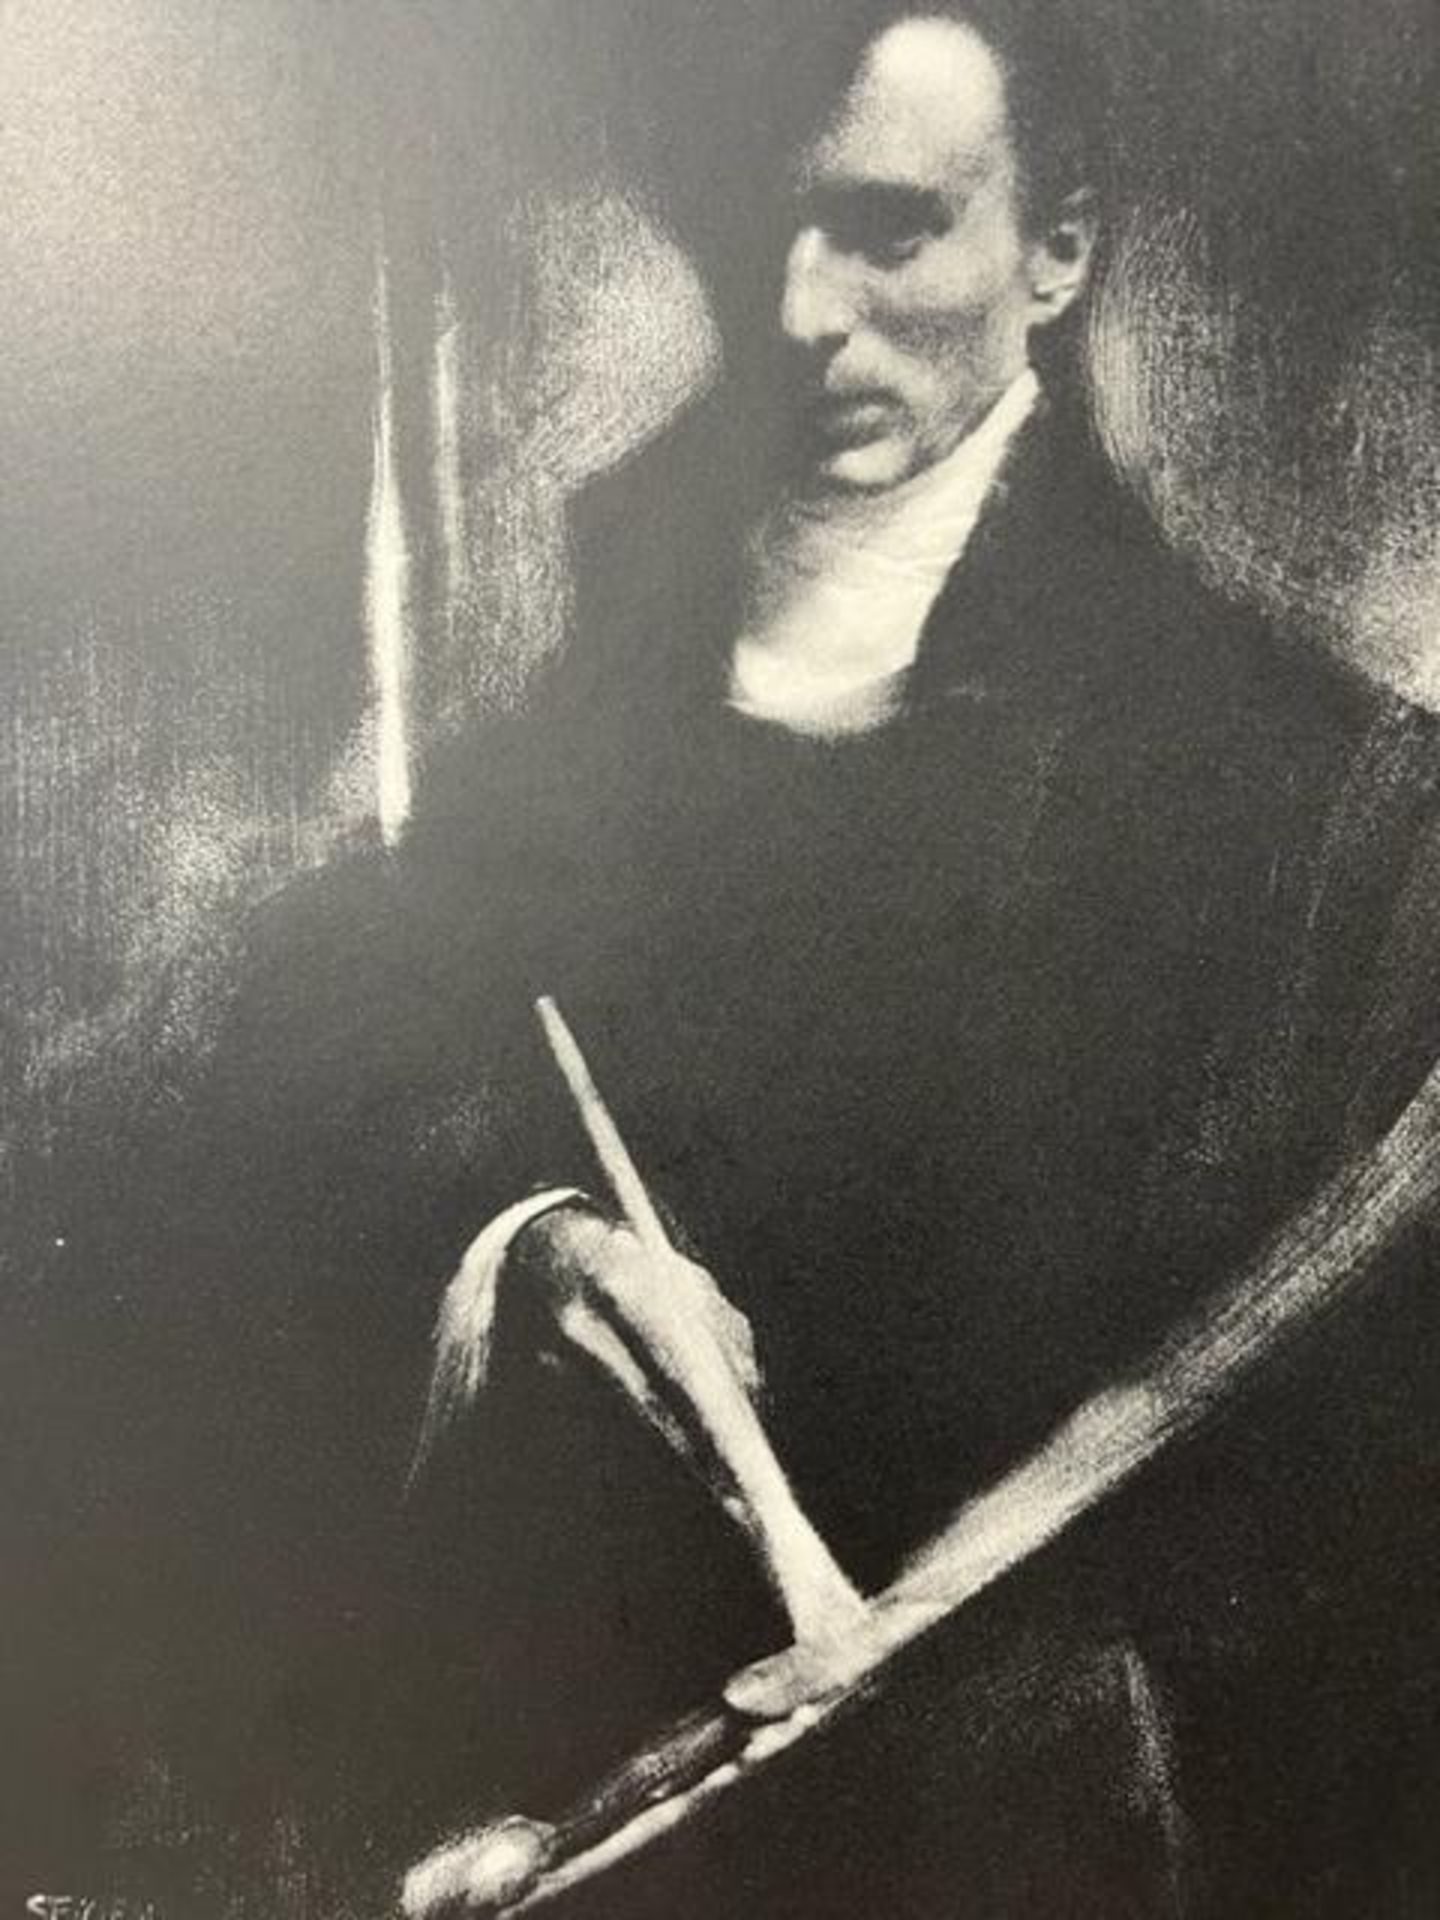 Edward Steichen "Self Portrait with Brush and Palette" Print.